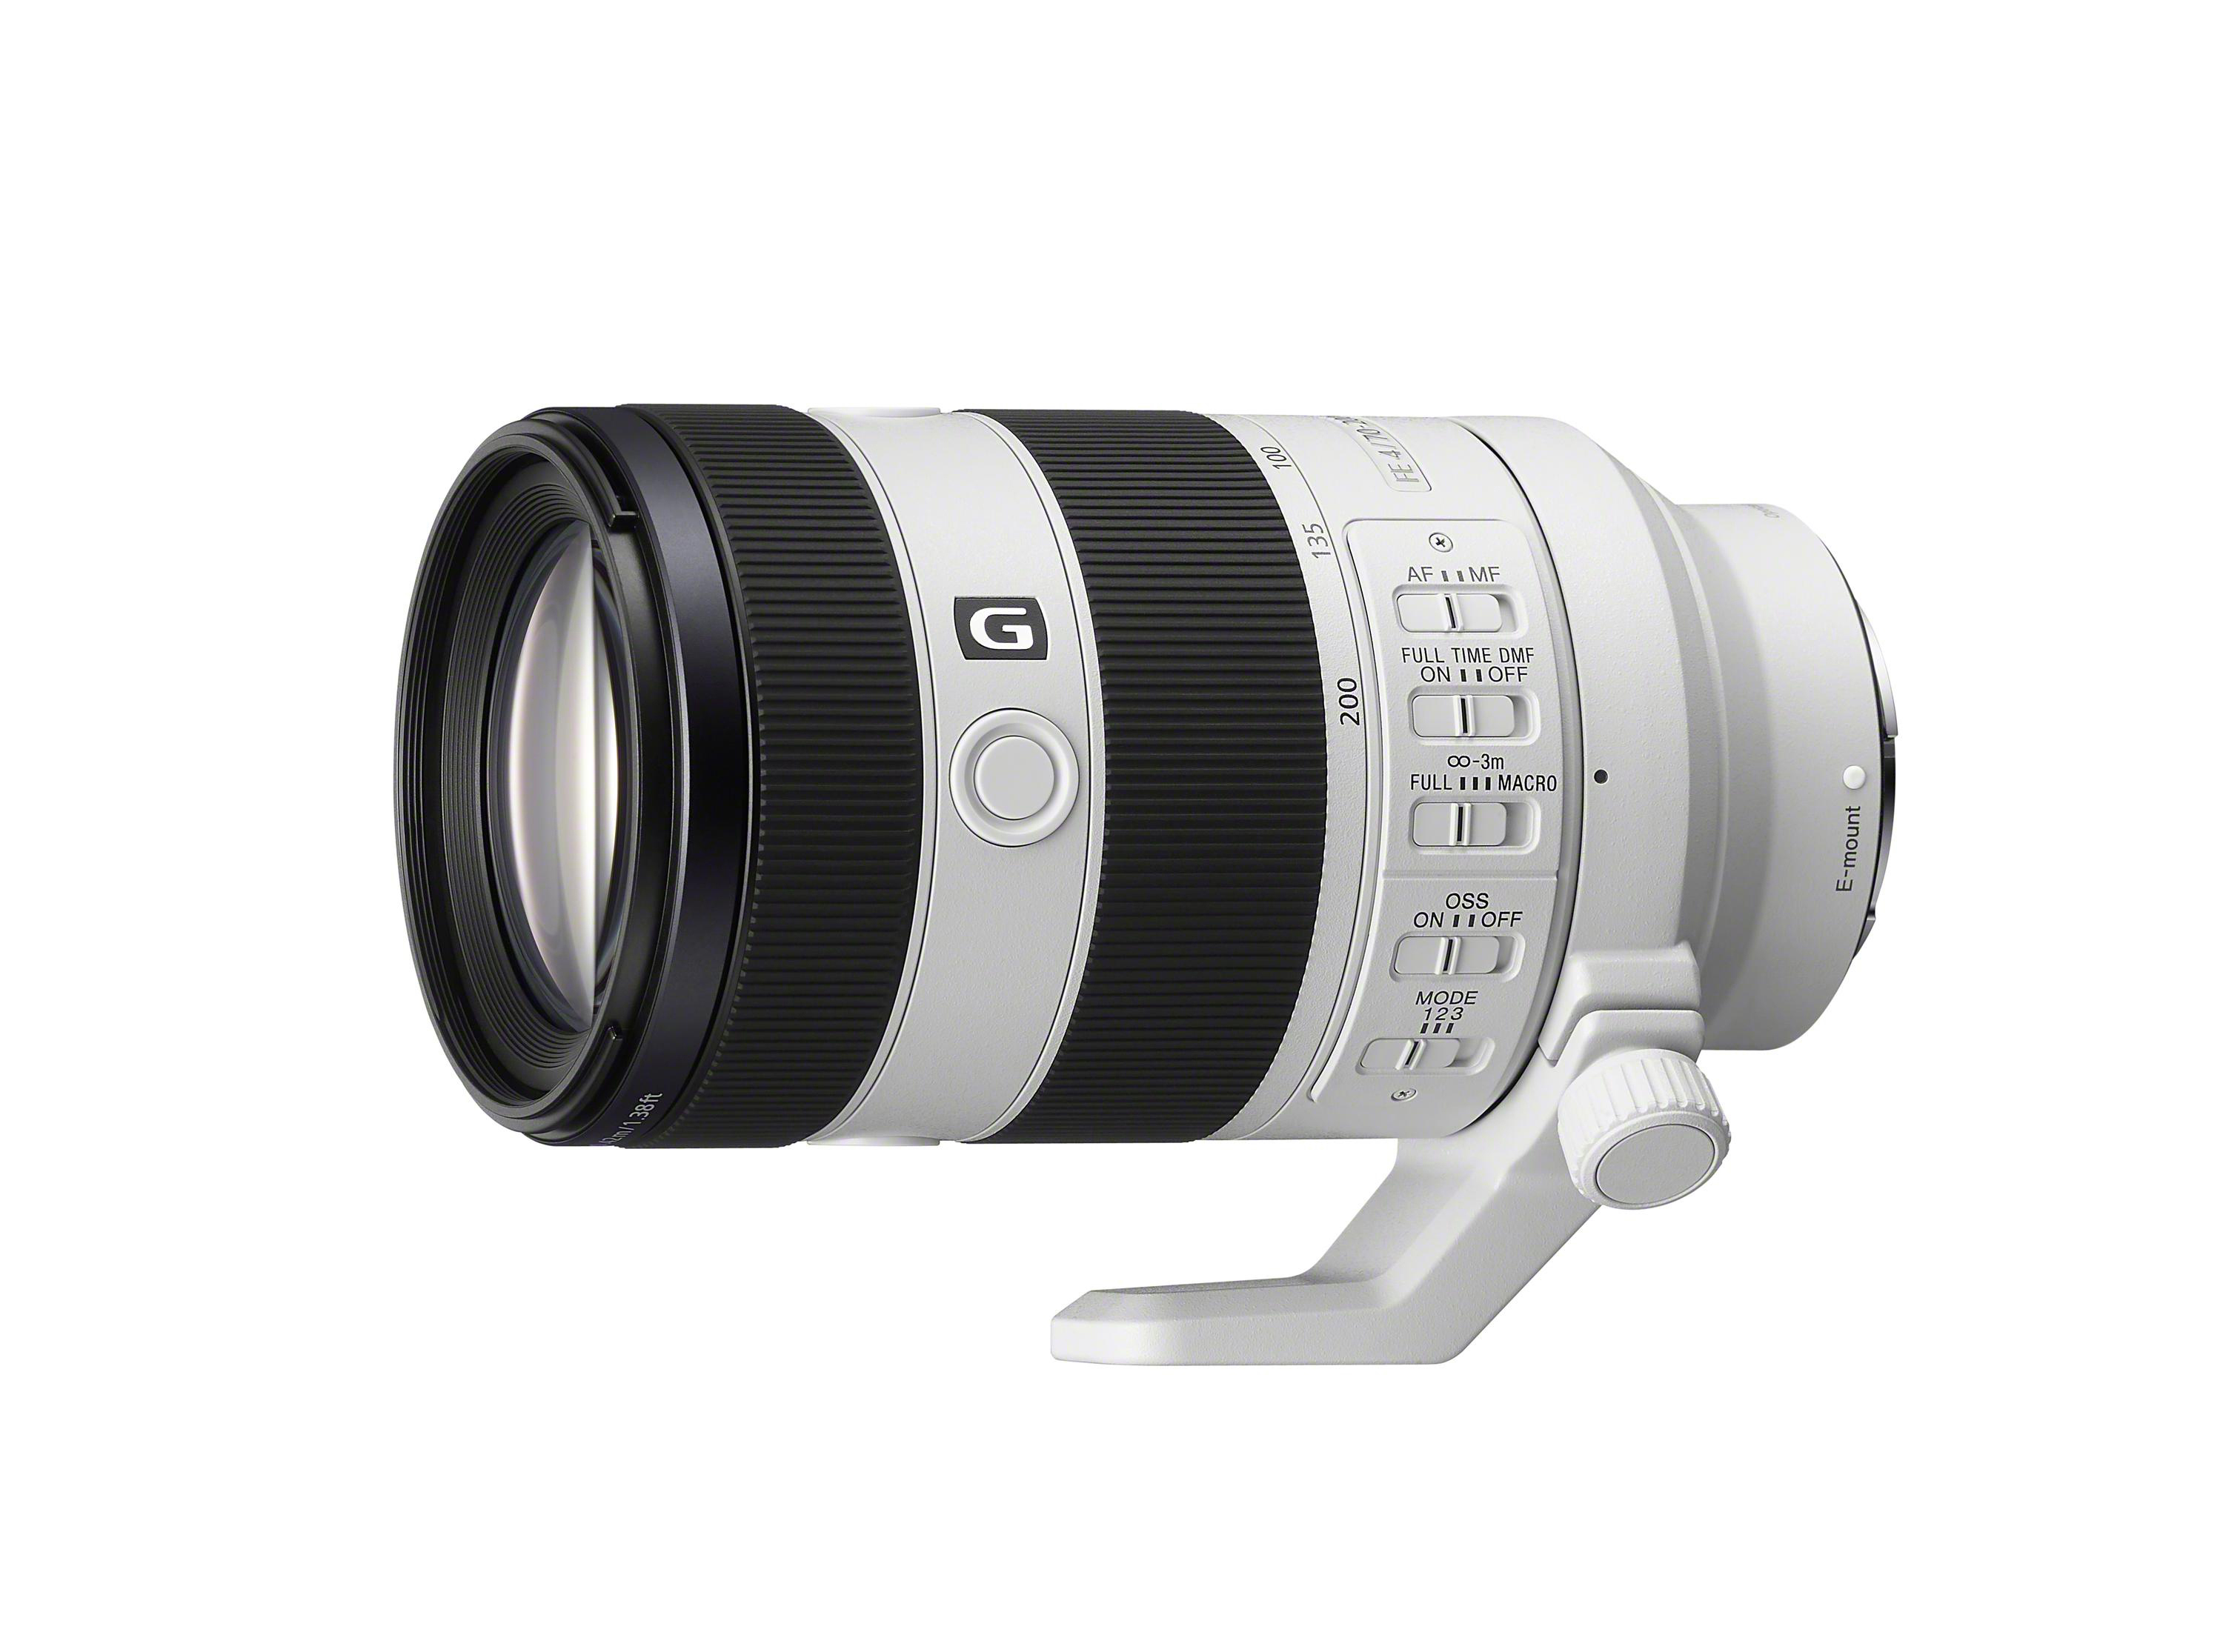 DMR, FRL, ED, mm 70 Blende, SEL70200G2 200 - (Objektiv Schwarz) E-Mount, Sony f/4.0 OS, SONY mm Circulare für G-Lens, IF